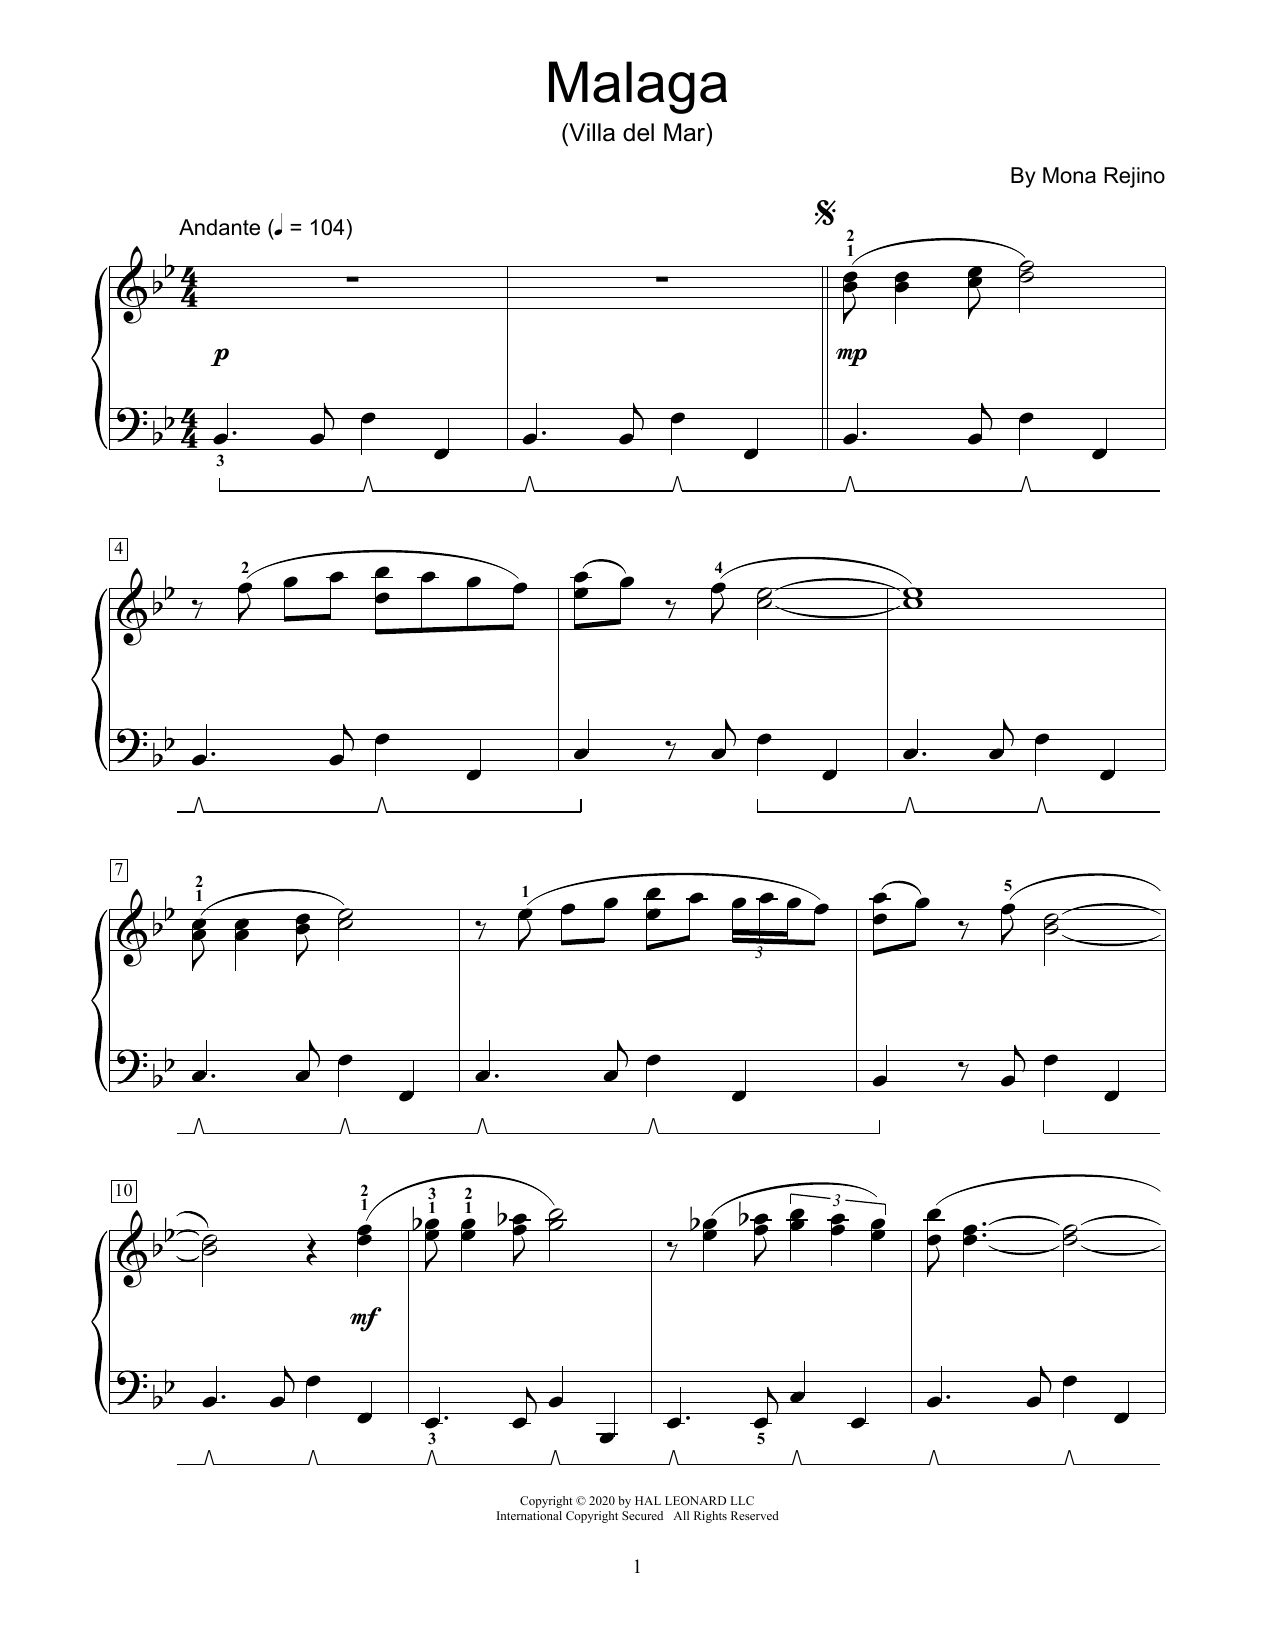 Download Mona Rejino Malaga (Villa Del Mar) Sheet Music and learn how to play Educational Piano PDF digital score in minutes